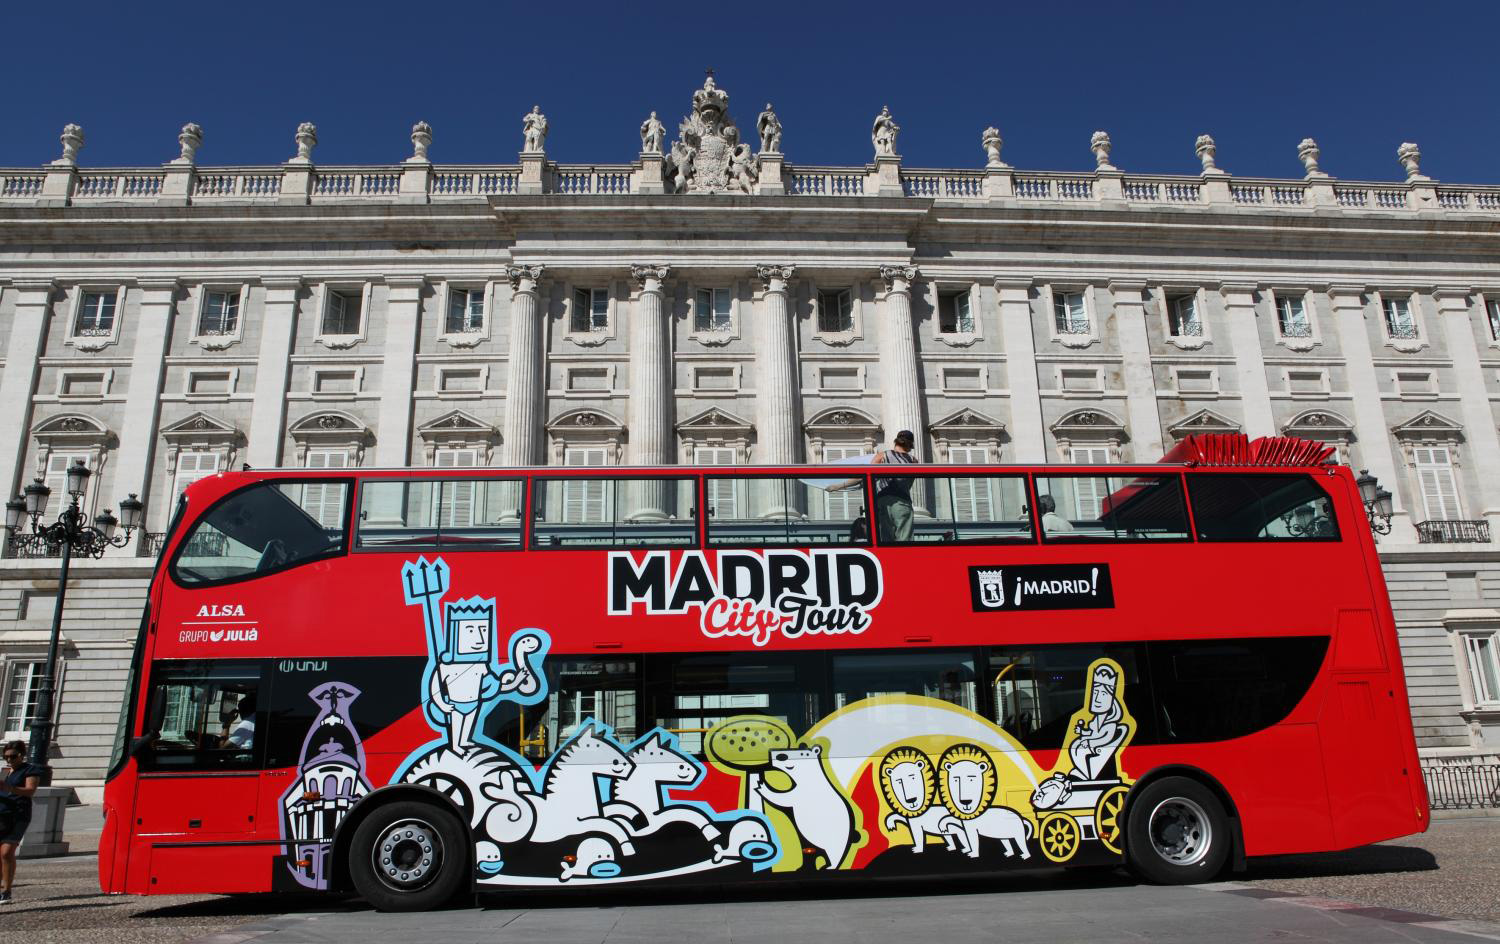 madrid tourism bus